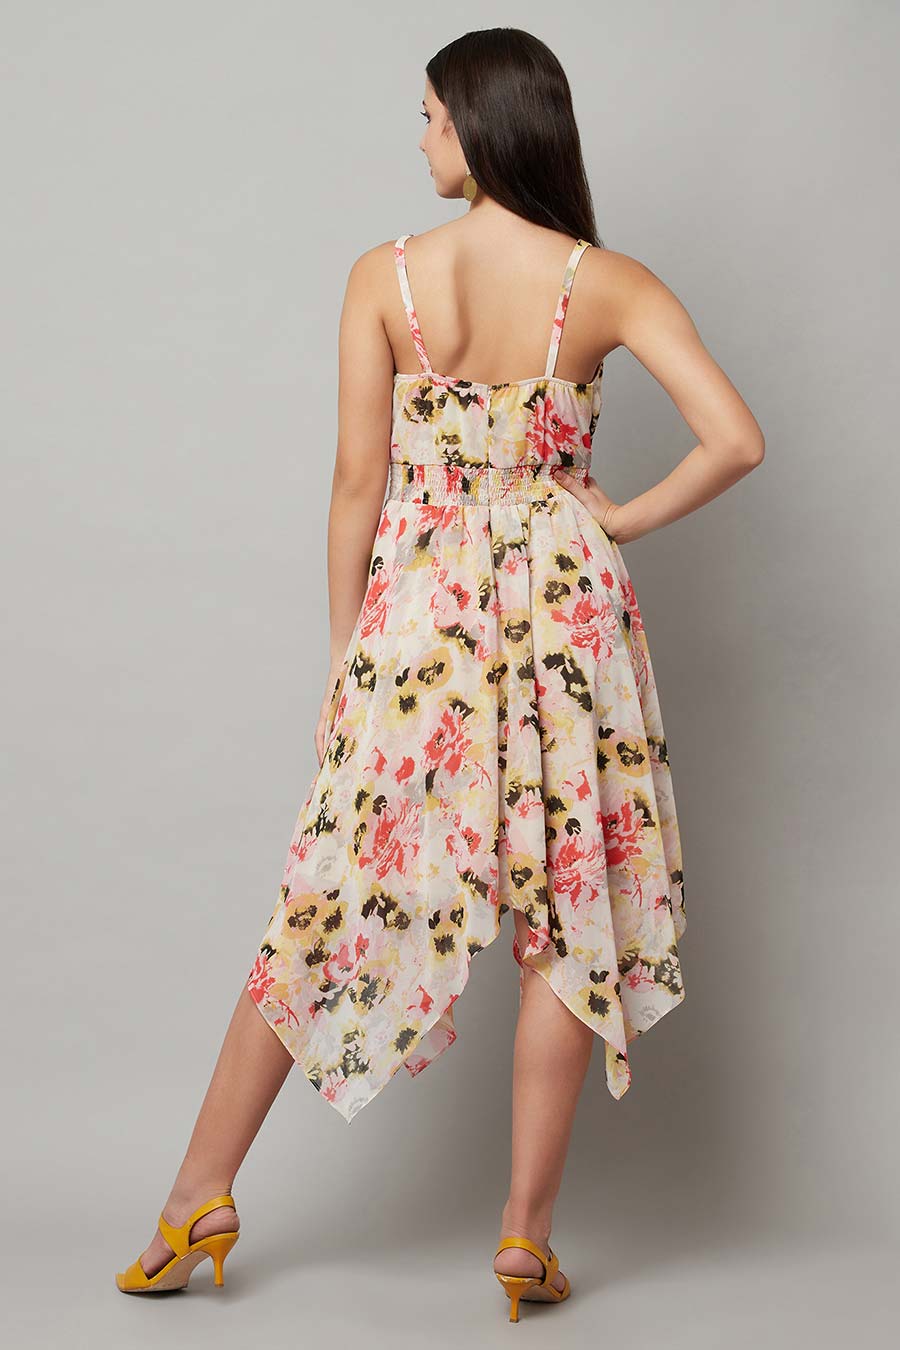 Beige Floral Print Dress